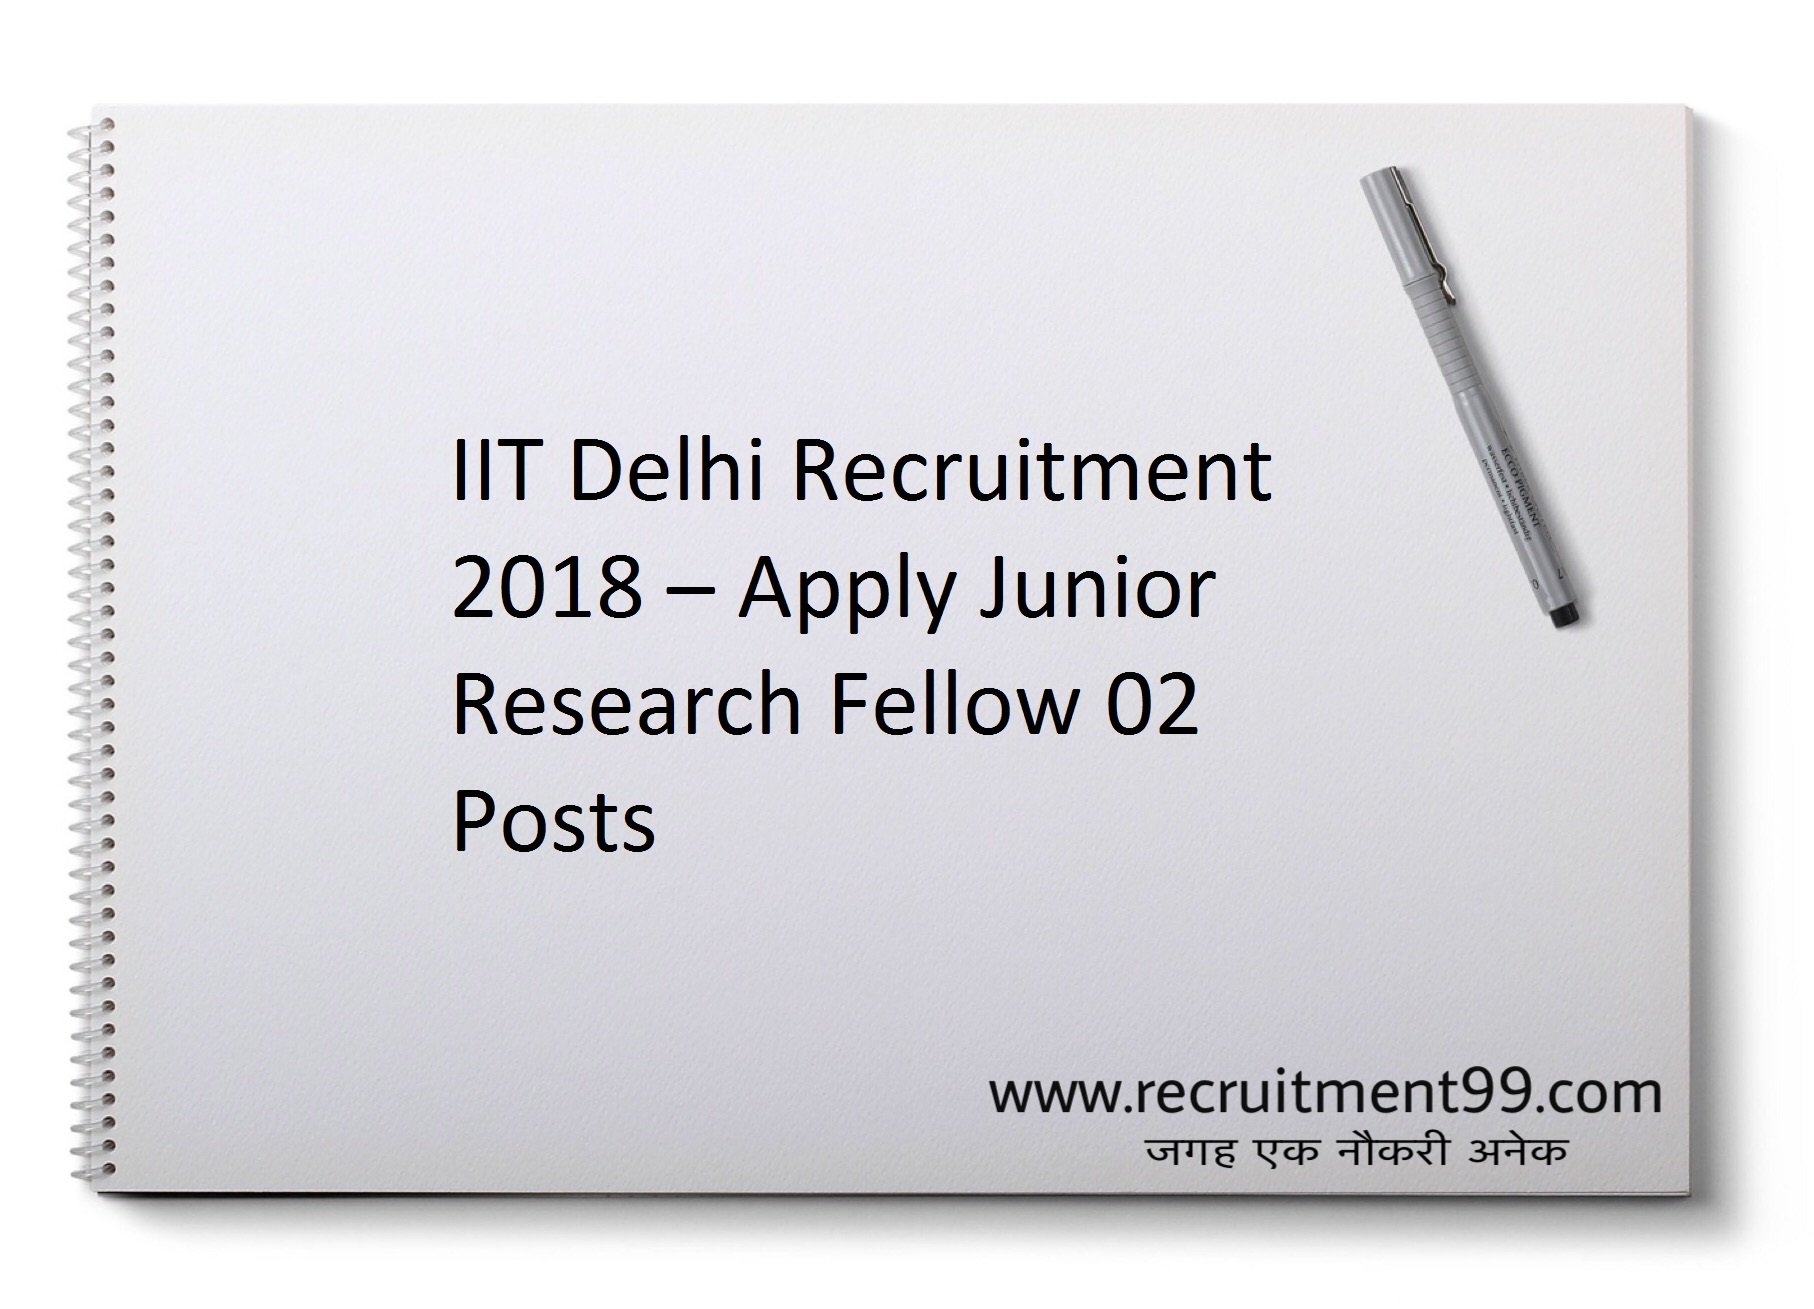 IIT Delhi Recruitment 2018 – Apply Junior Research Fellow 02 Posts